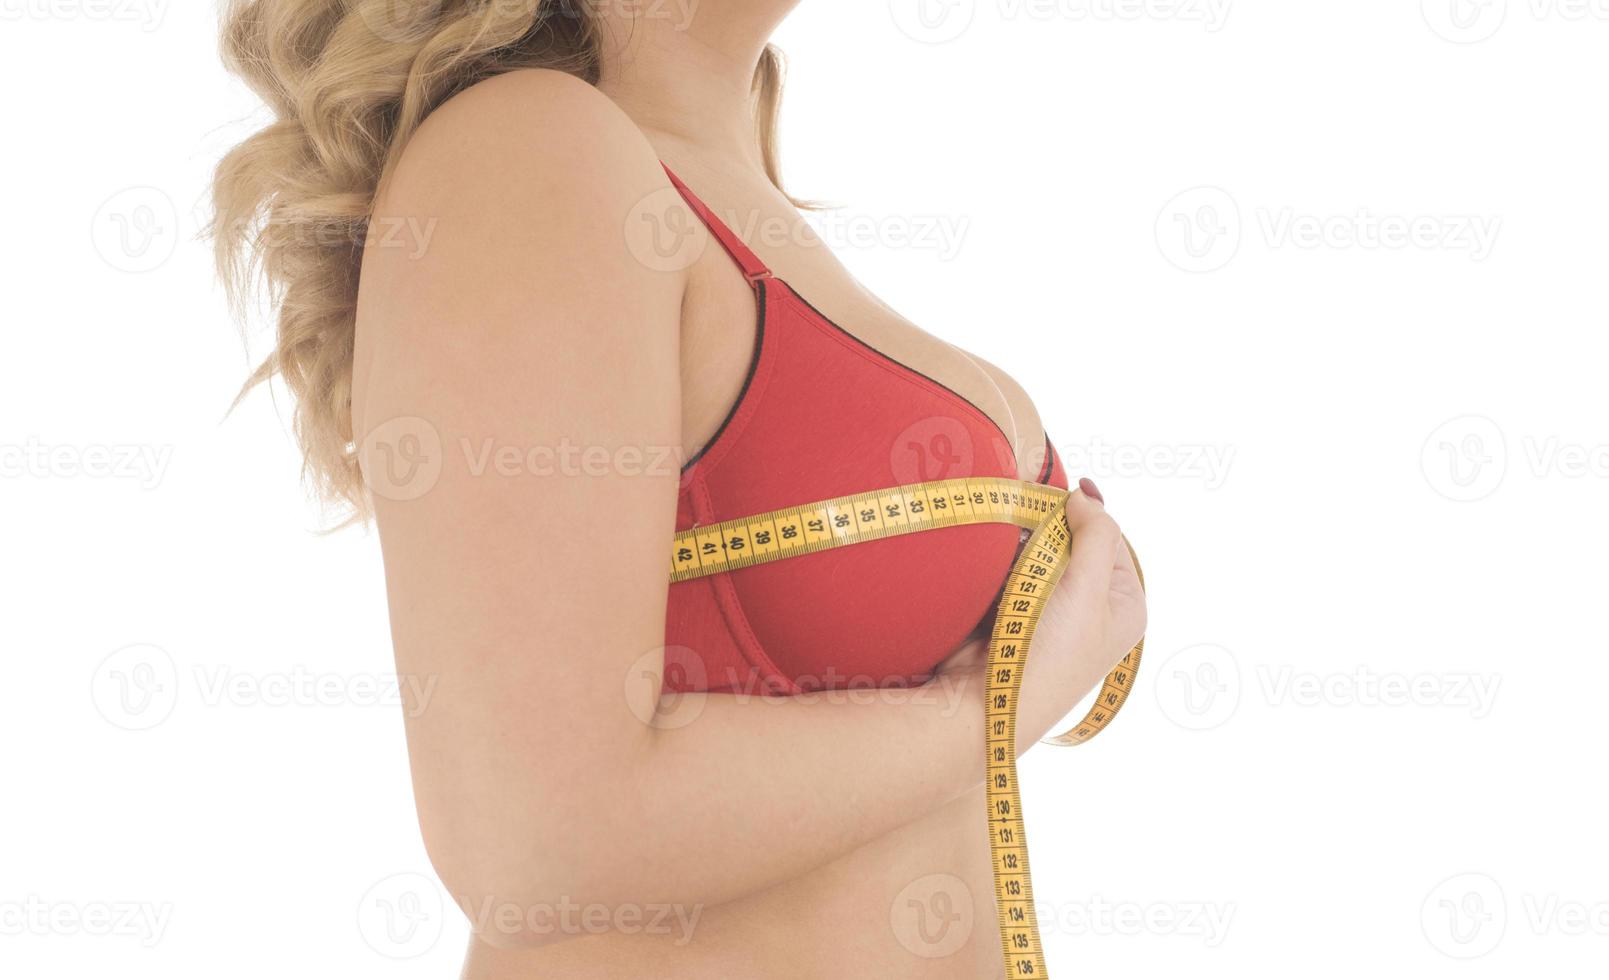 femme mesure sa poitrine avec un ruban à mesurer photo